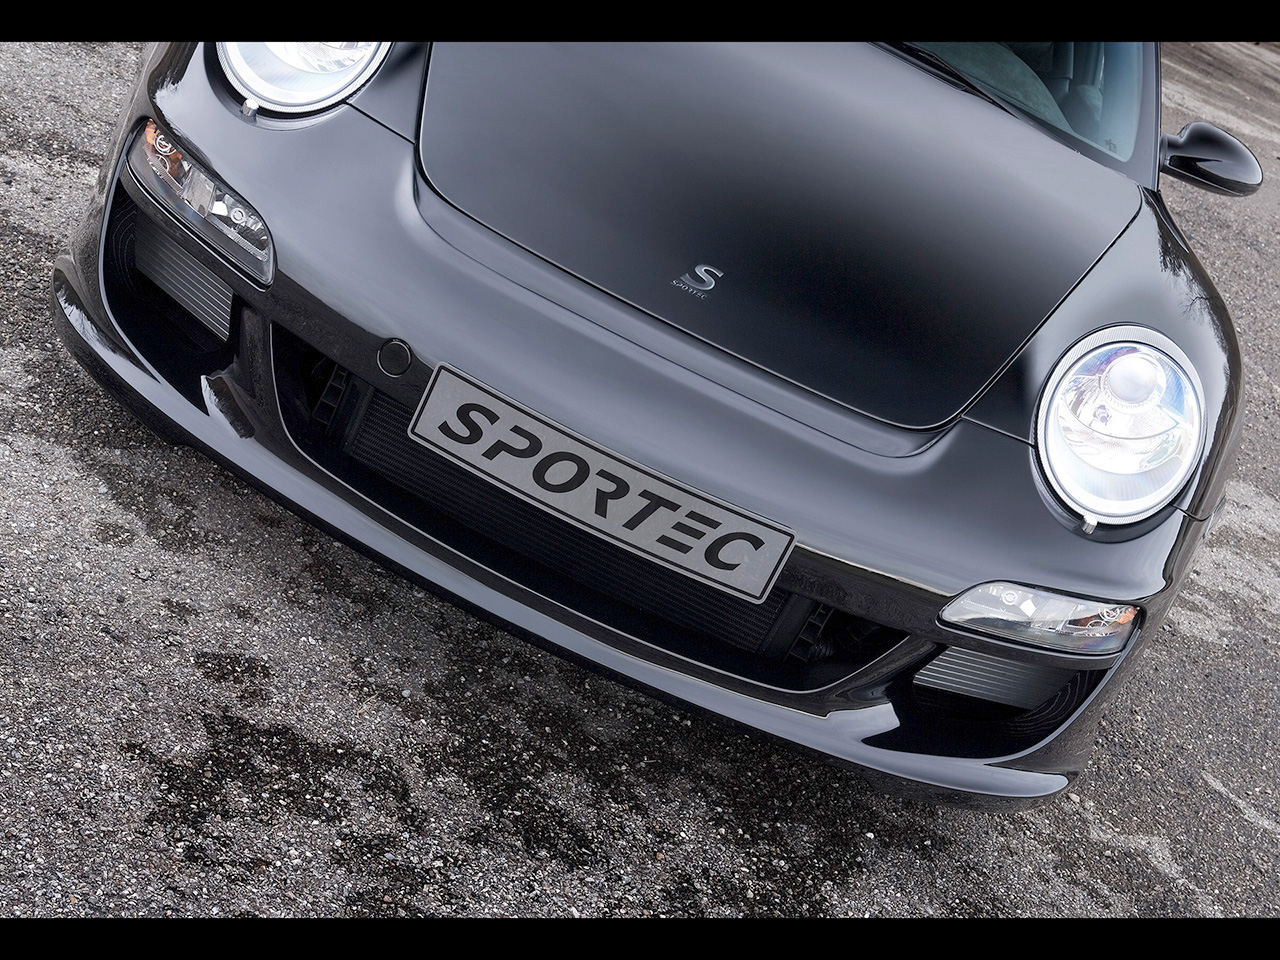 2006 Sportec SPR1 based on Porsche 911 Turbo